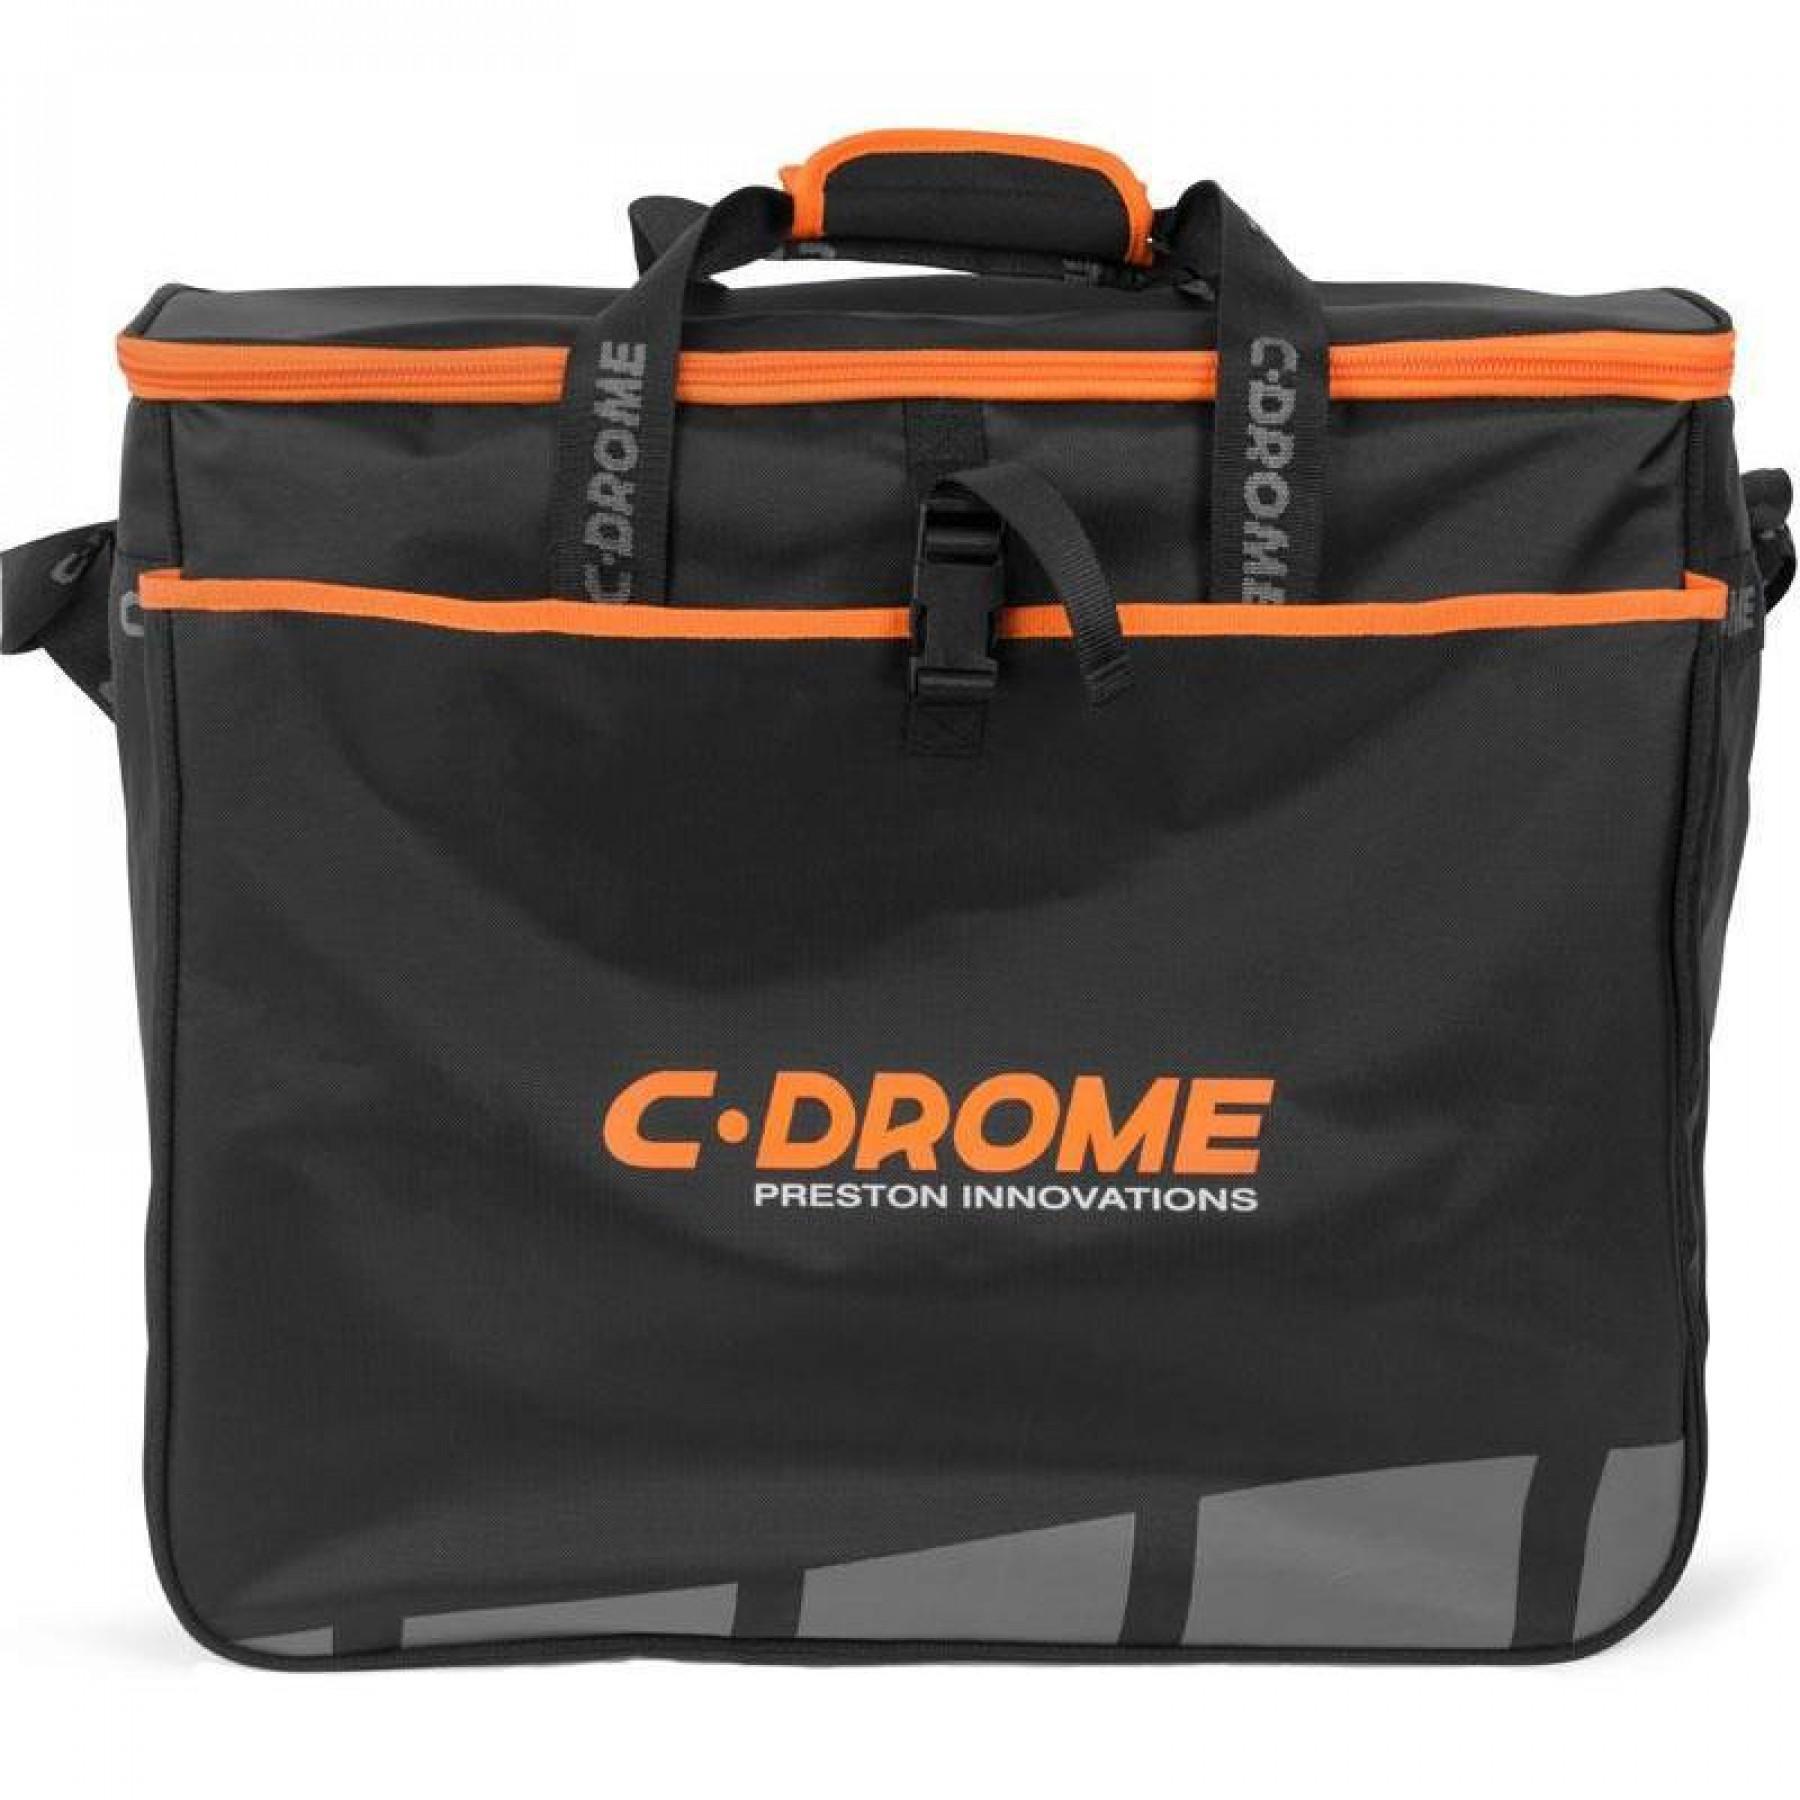 Shopping bag Preston C-Drome